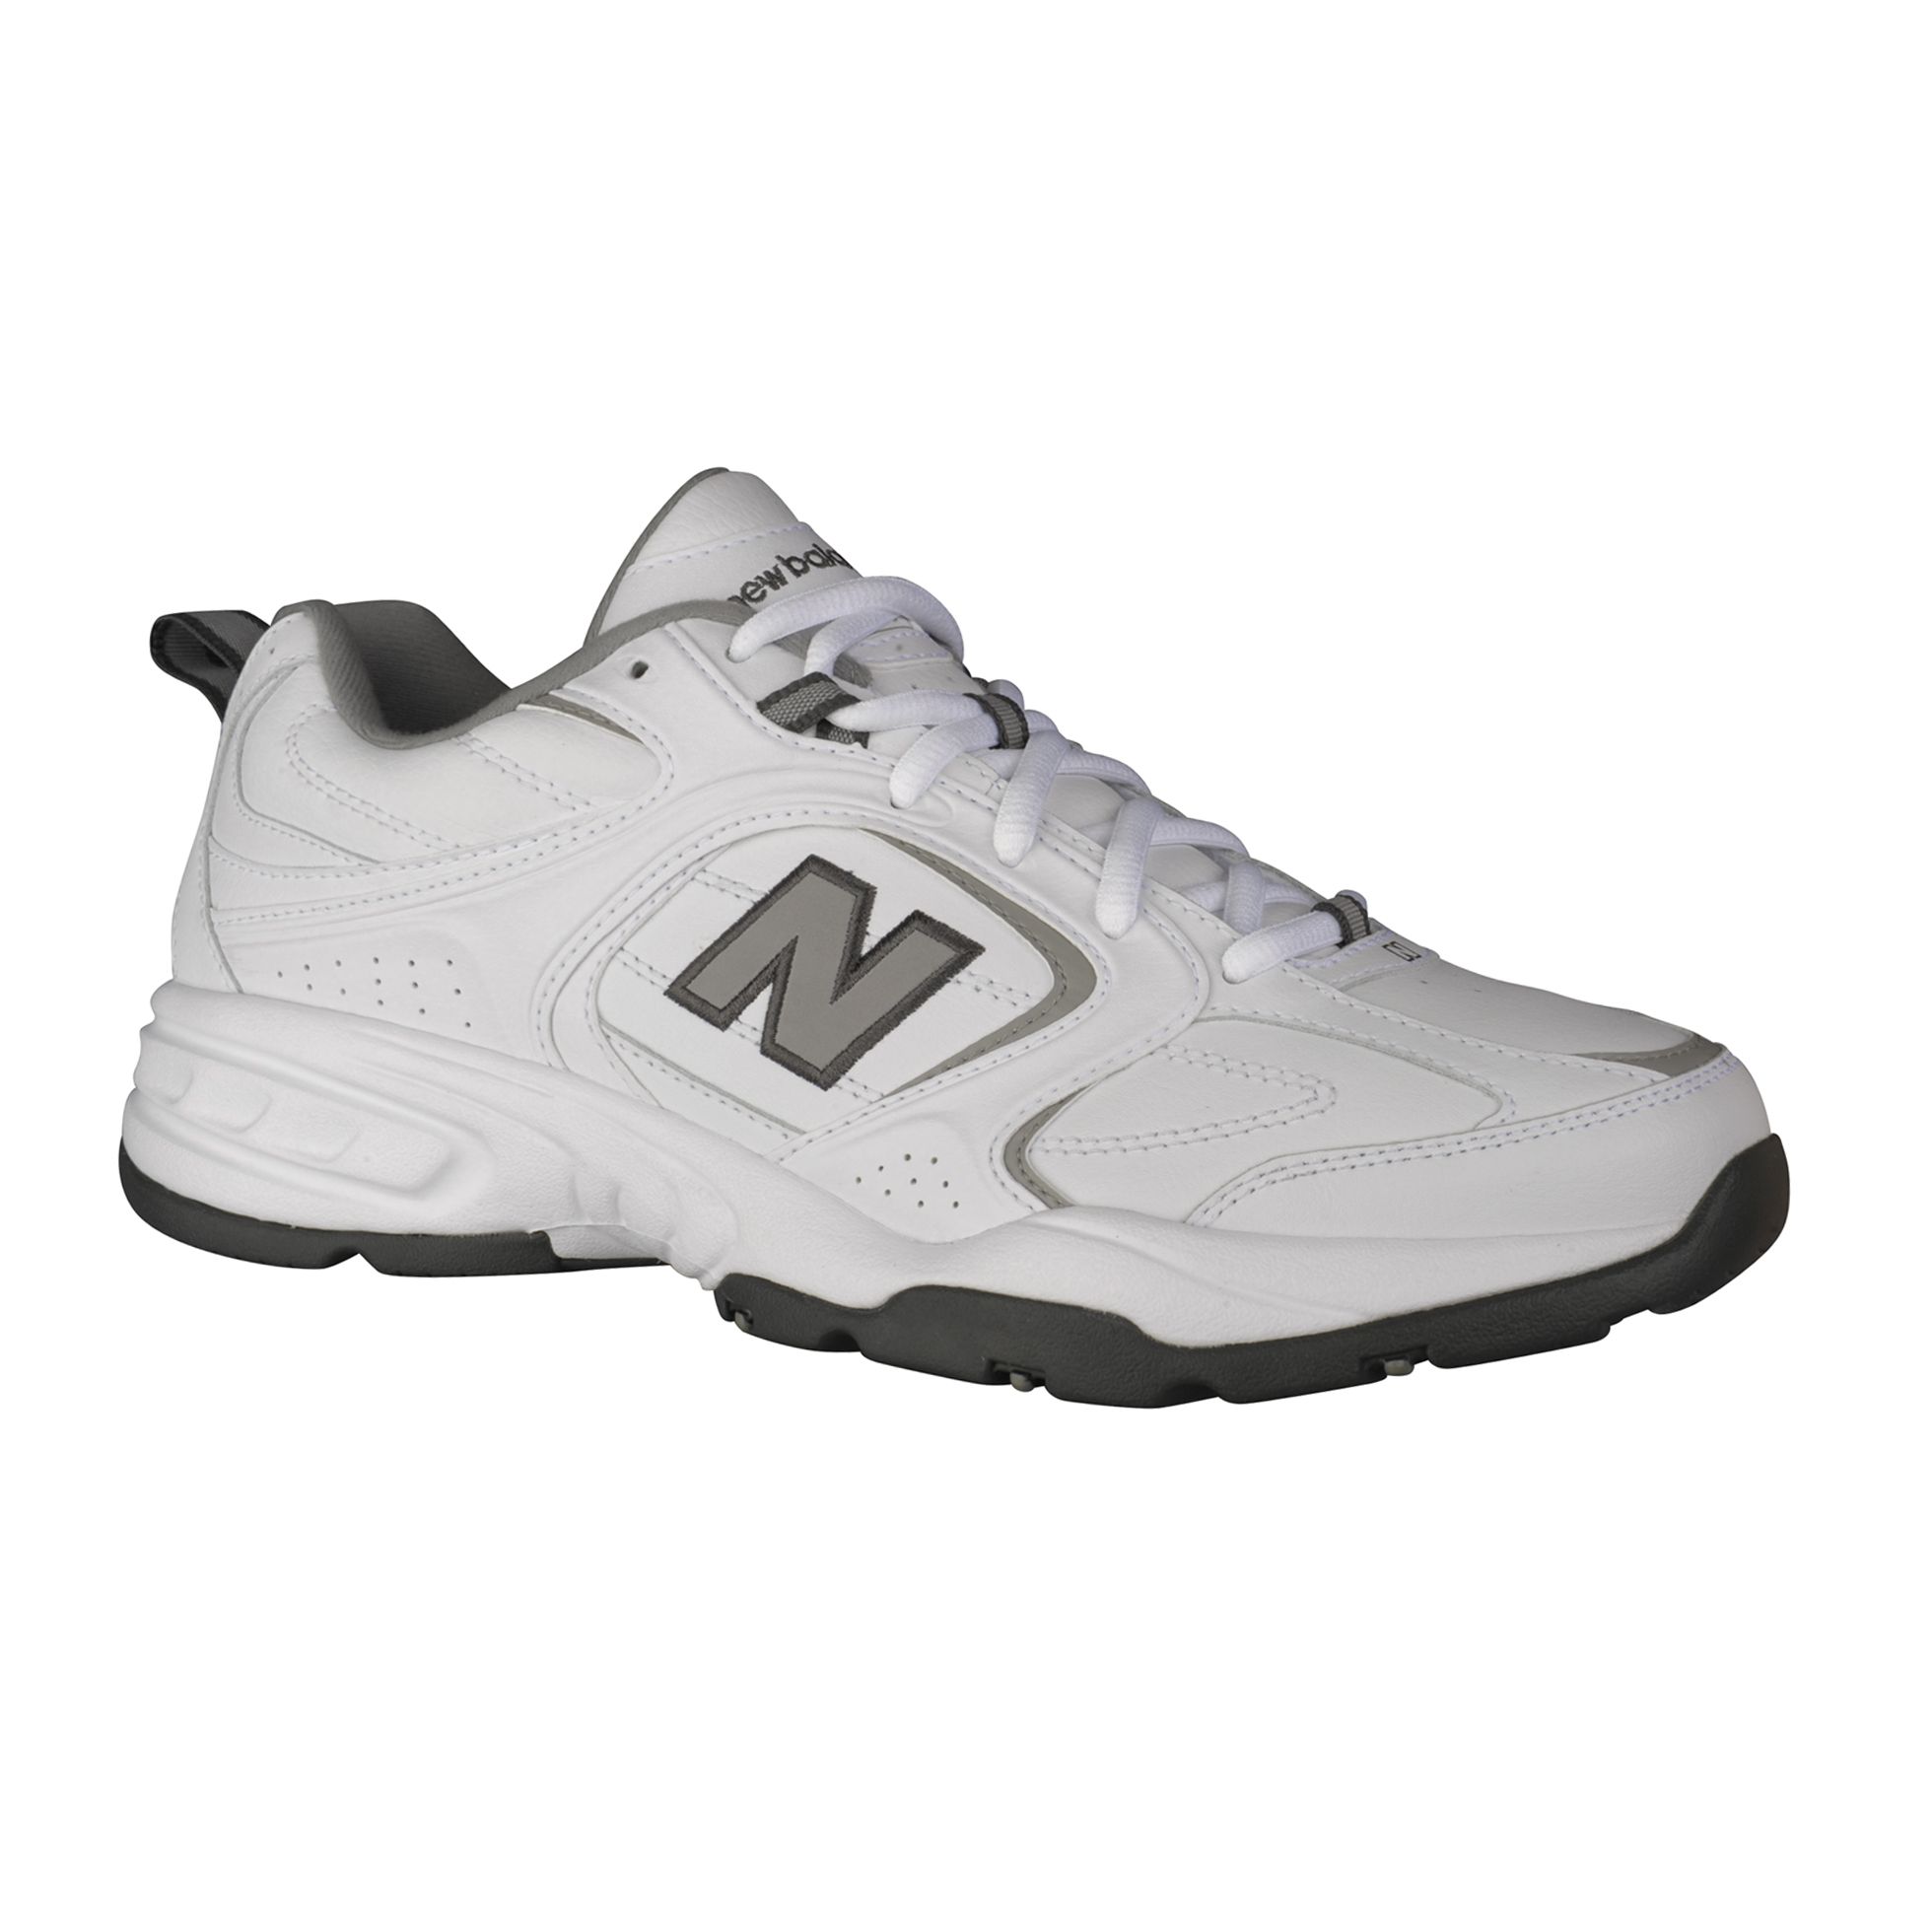 New Balance Men's 408 Shoe - White/Navy